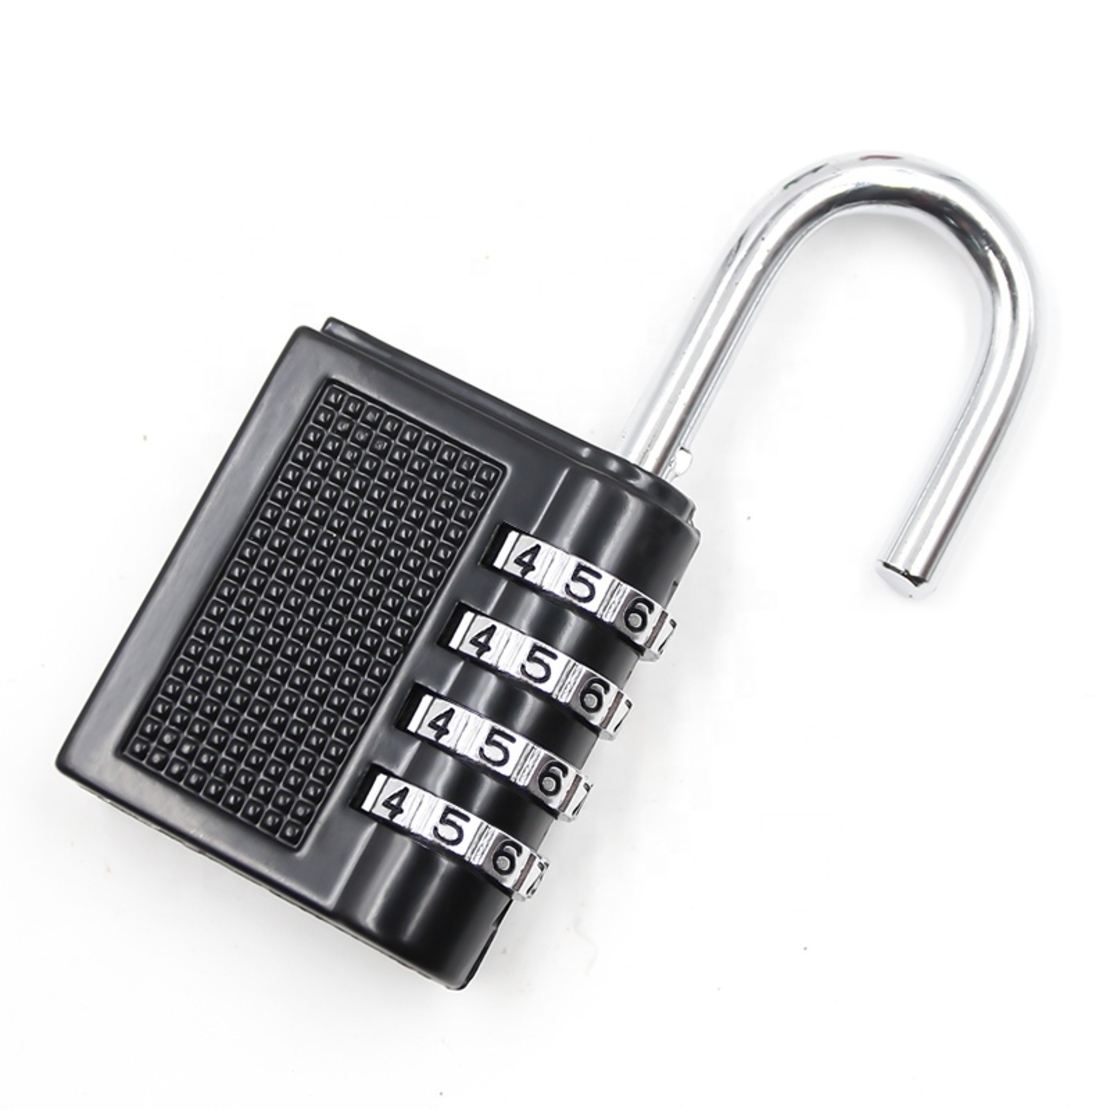 4 Digital Combination Lock Safe Black